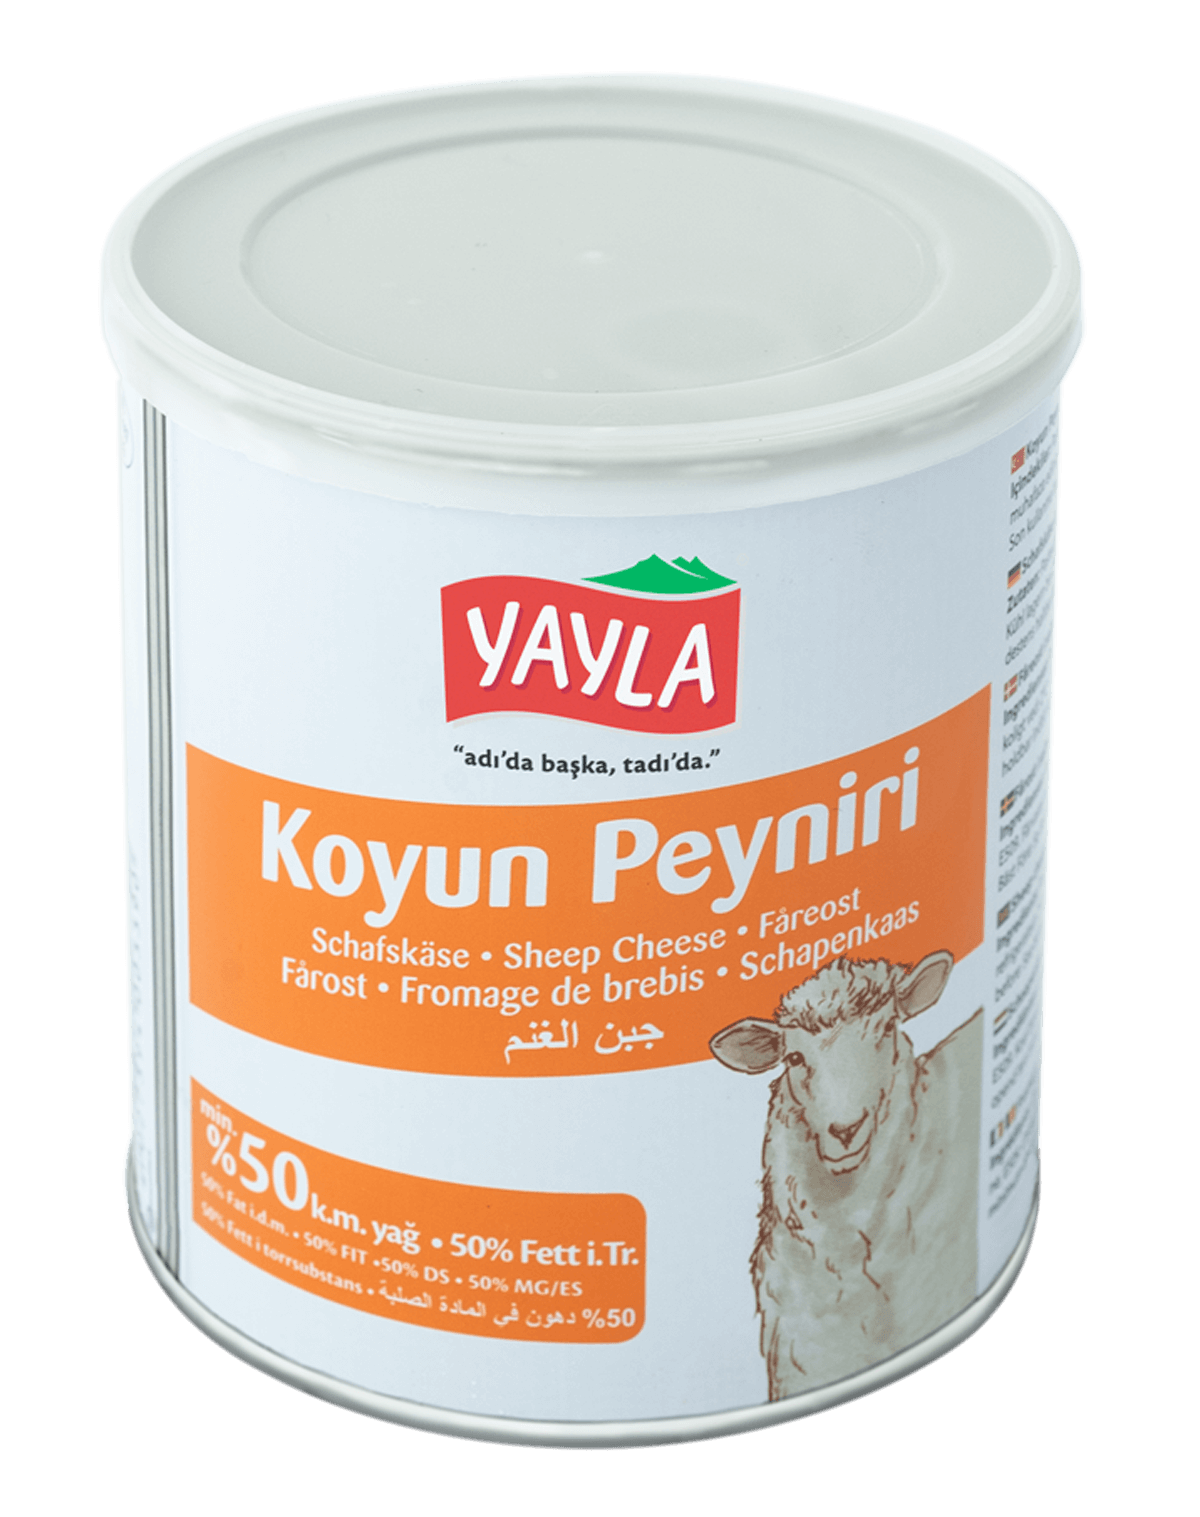 Yayla Koyun Peyniri / Schafskäse